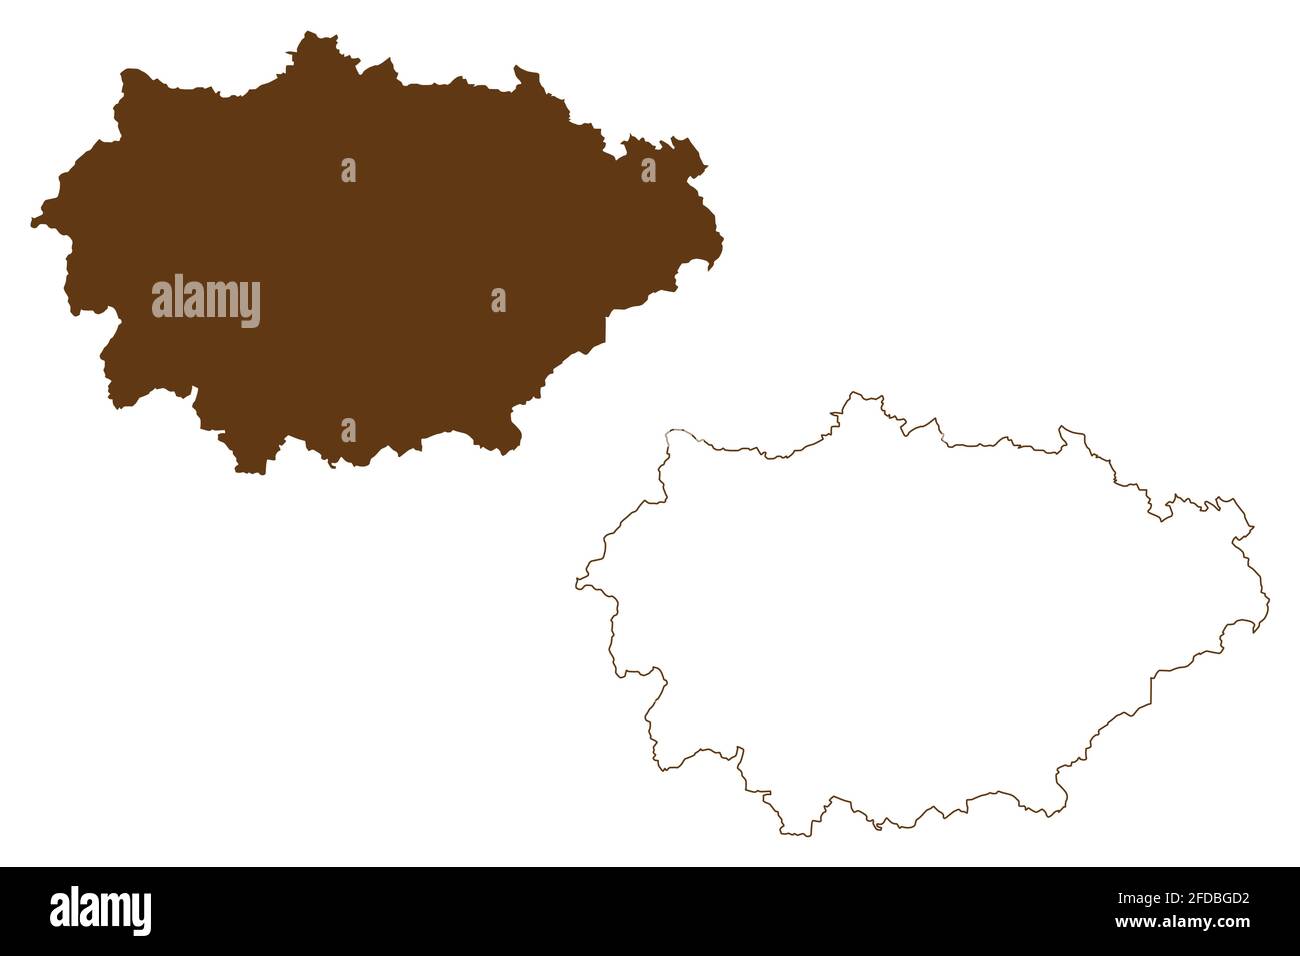 Marburg-Biedenkopf district (Federal Republic of Germany, rural district Giessen region, State of Hessen, Hesse, Hessia) map vector illustration, scri Stock Vector